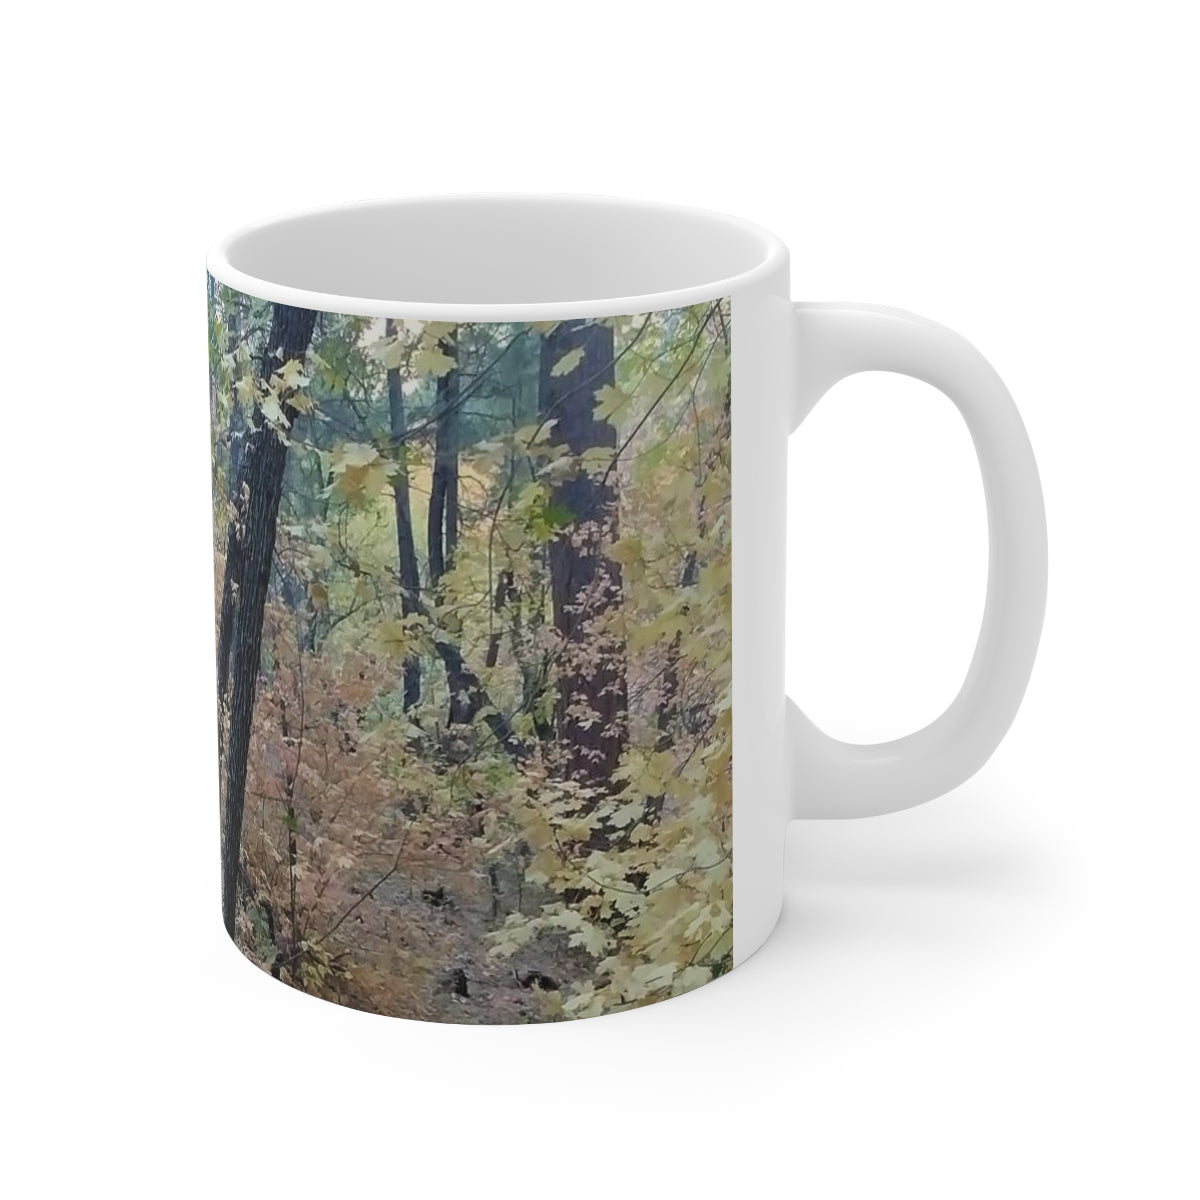 Coffee Mug - Boynton Canyon Trail, Sedona